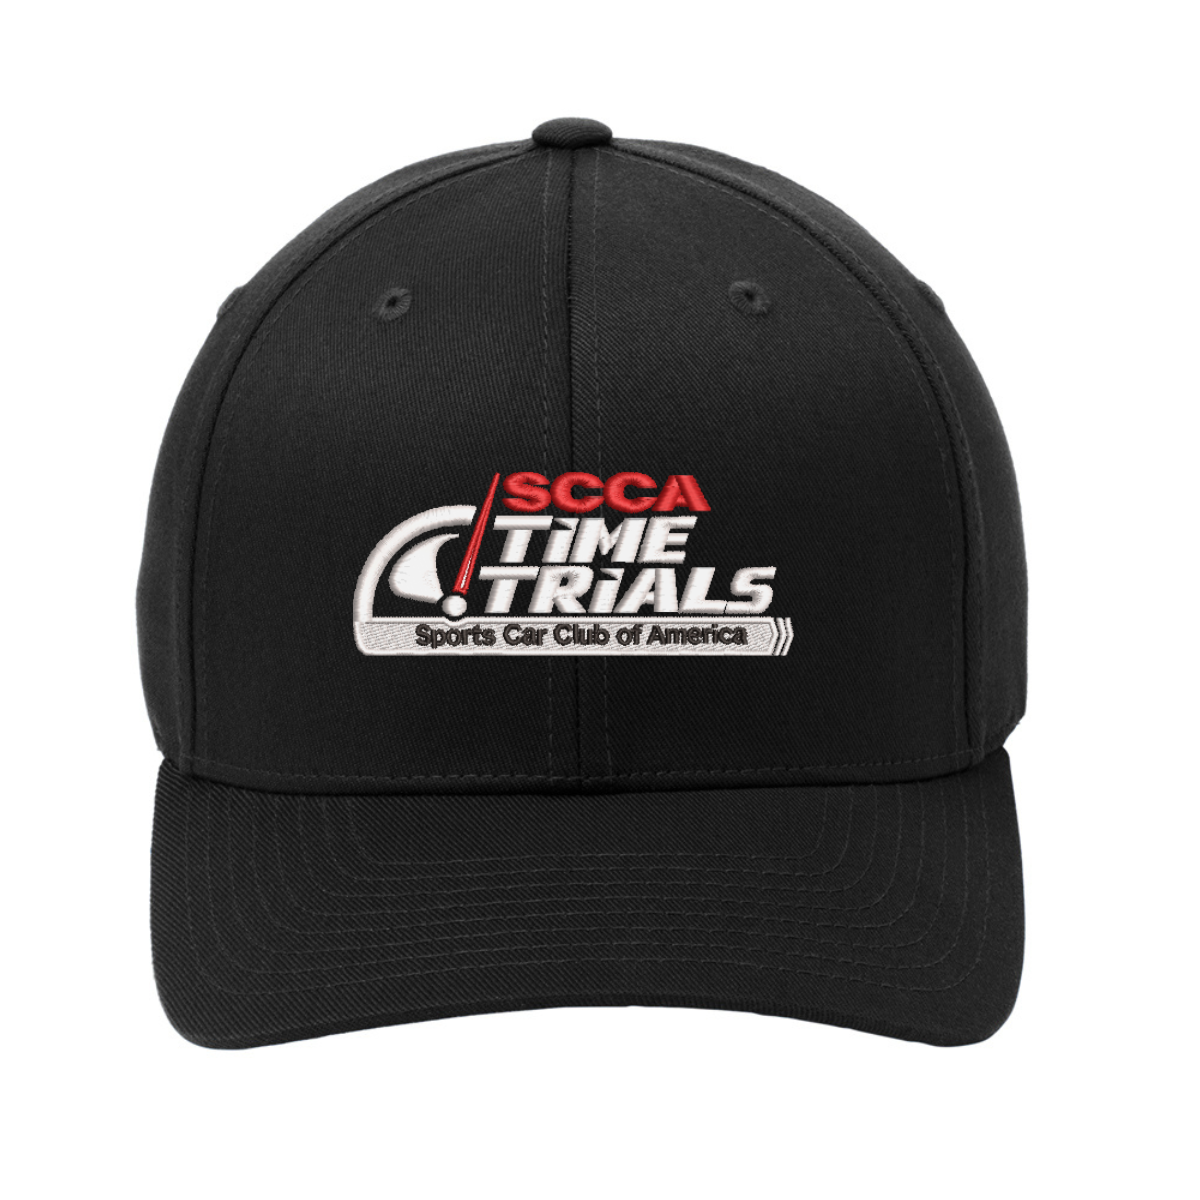 SCCA Time Trials Flex Fit Cap